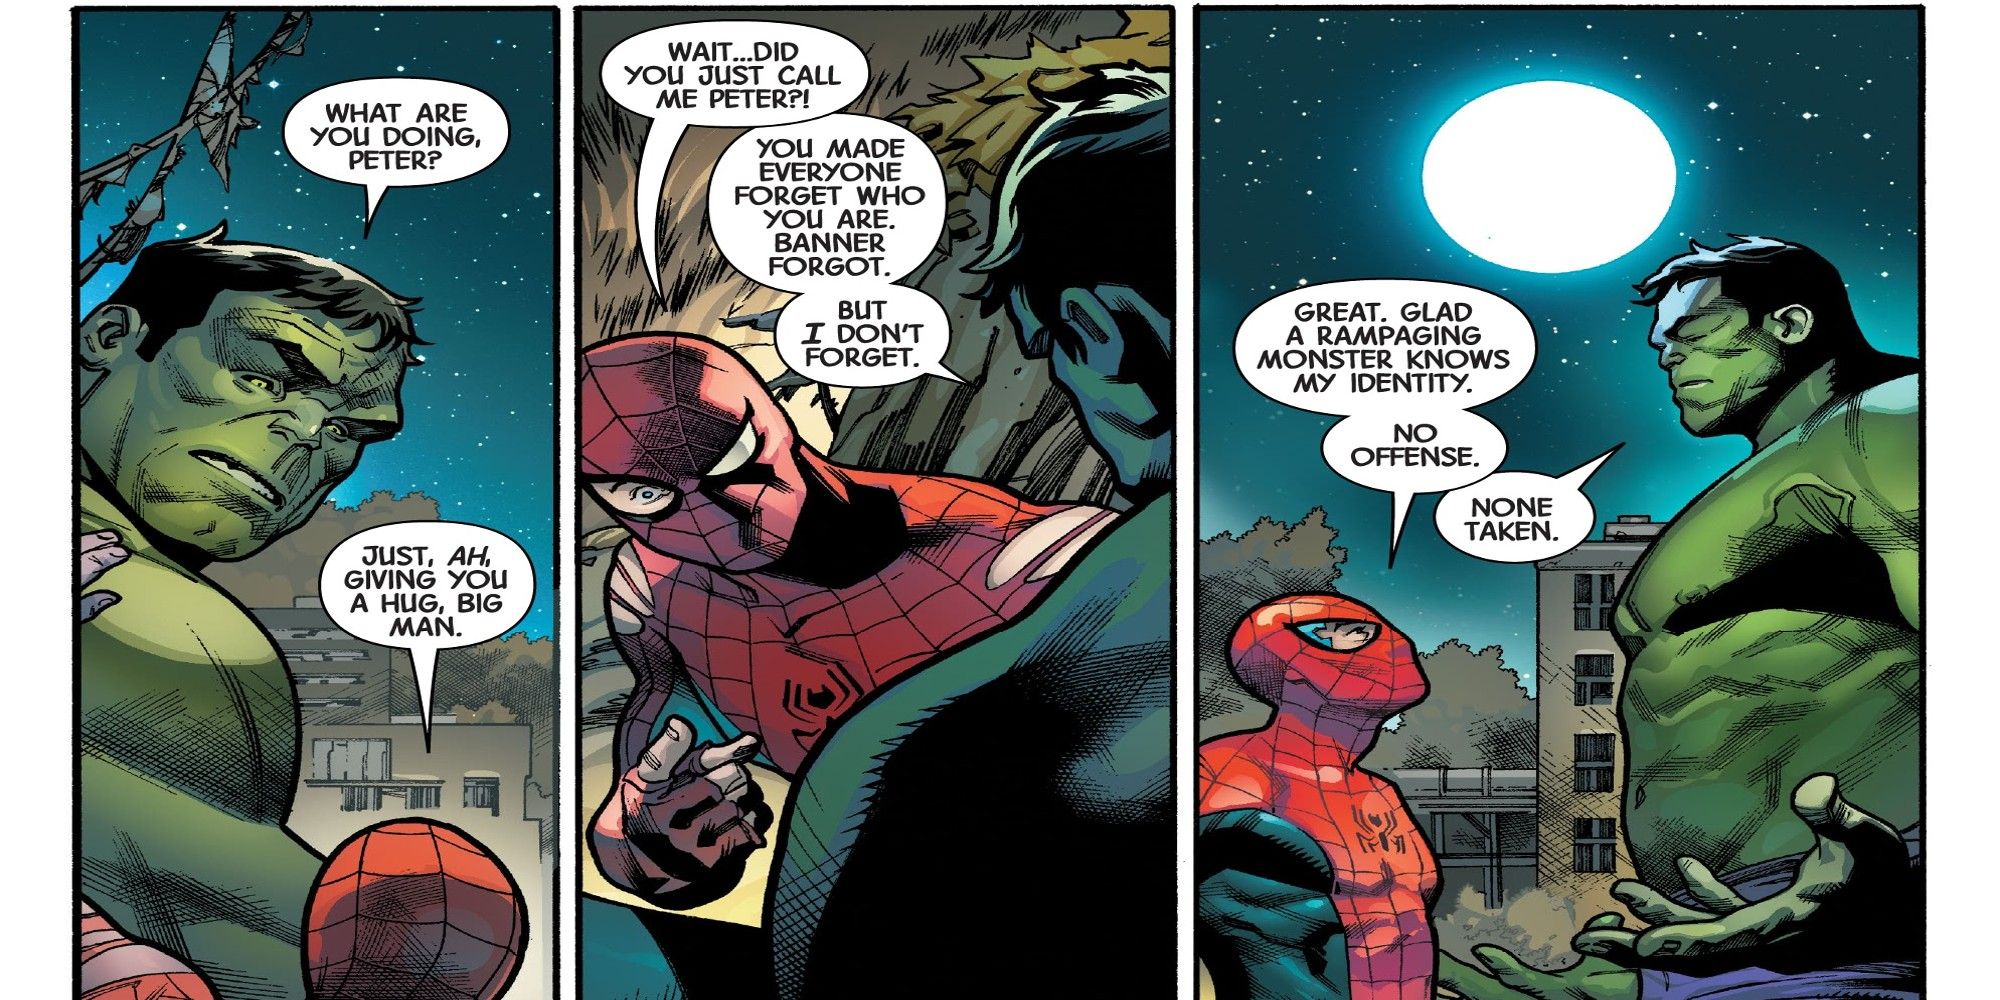 Immortal-Hulk-Knows-Spider-Man-Idenity